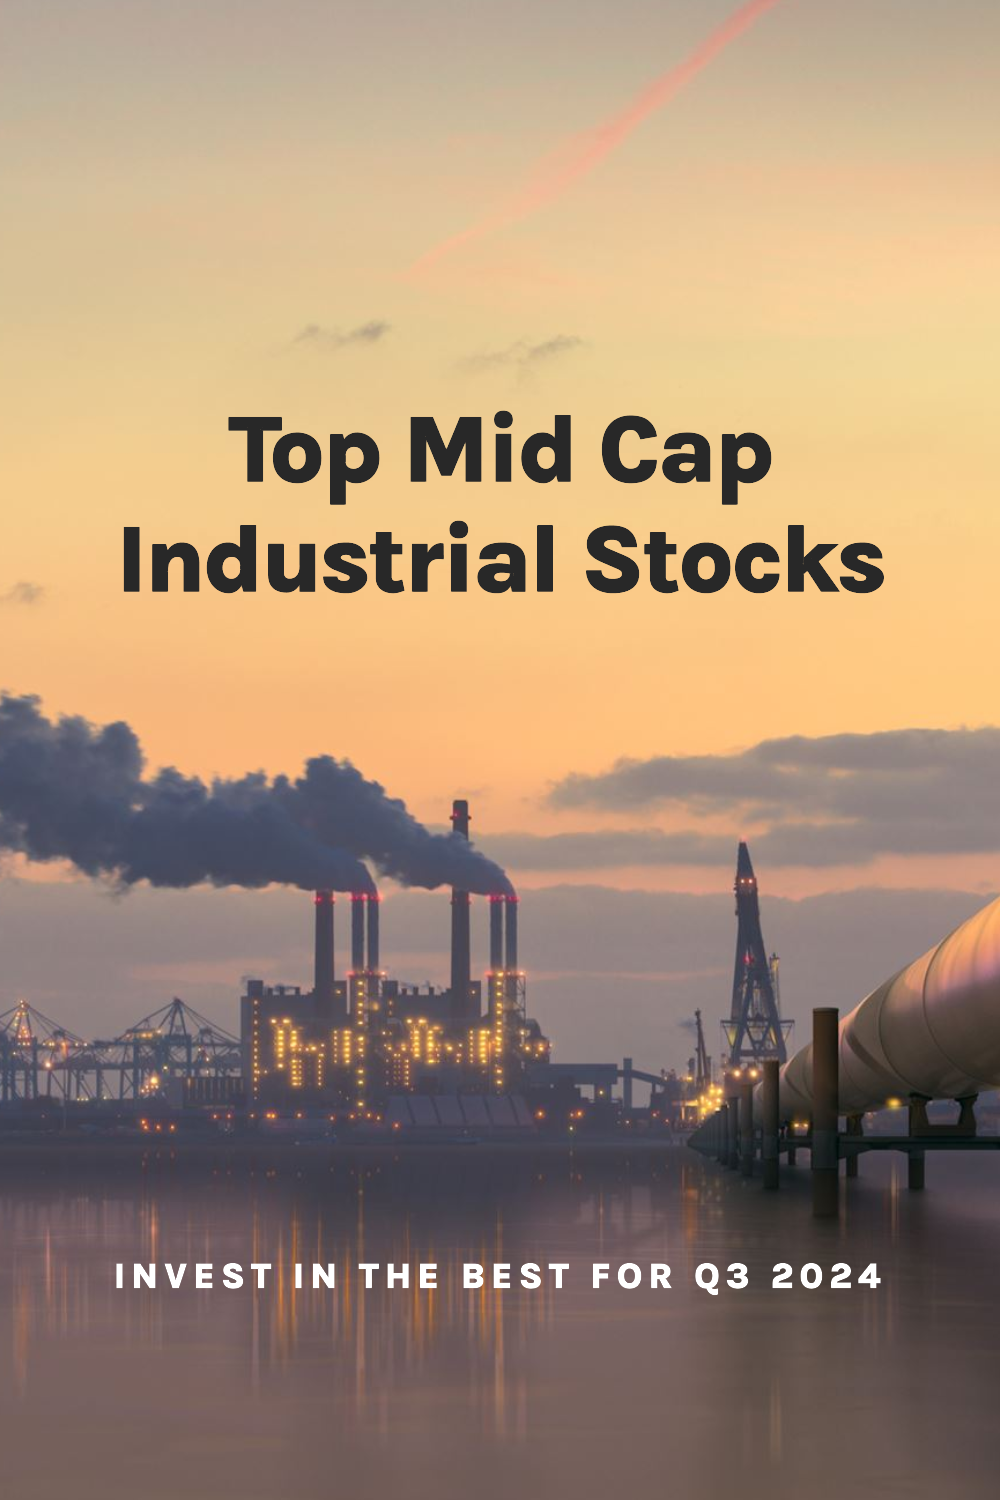 Best mid-cap industrial stocks to invest in Q3 2024